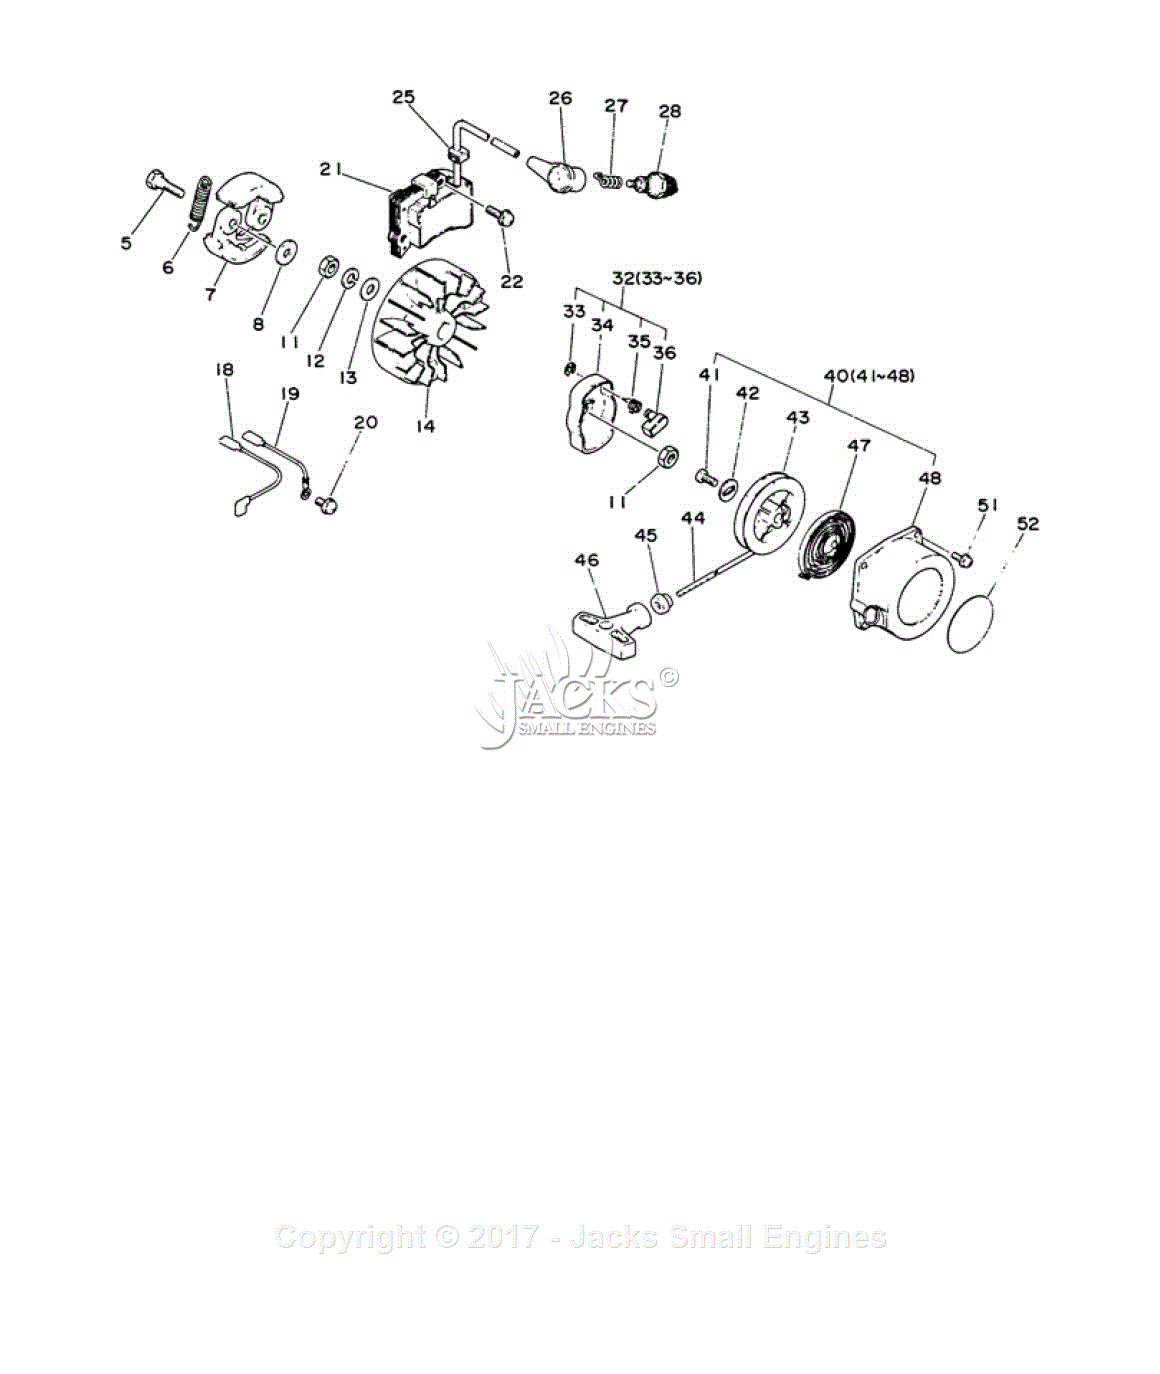 https://az417944.vo.msecnd.net/diagrams/manufacturer/echo/trimmers-straight-shaft/trimmer-brushcutter-srm/srm-2000/clutch-ignition-starter/diagram.gif